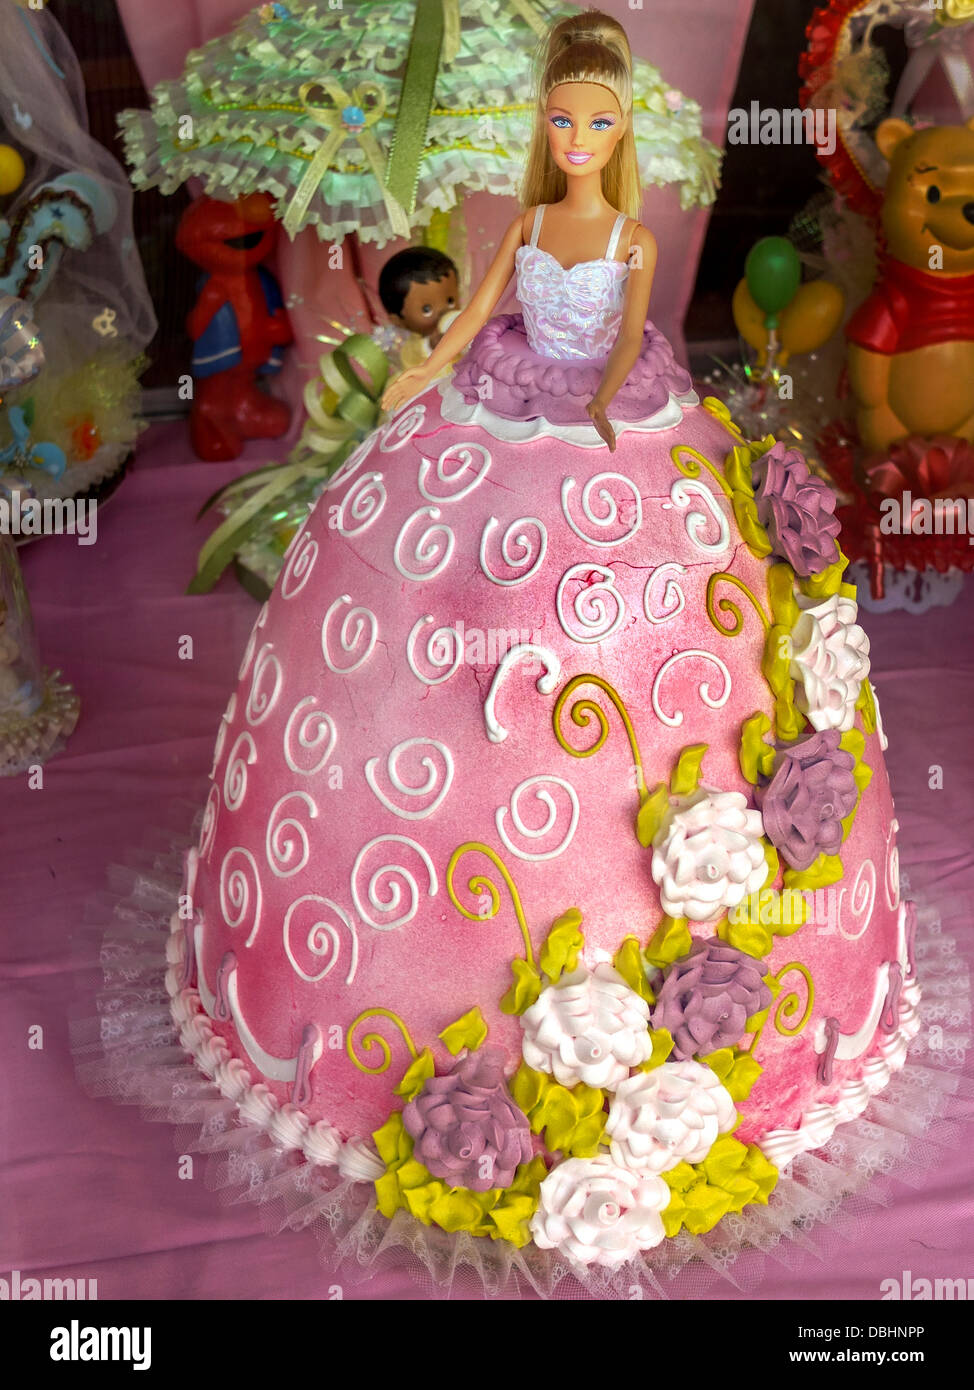 Barbie cake fotografías e imágenes de alta resolución - Alamy